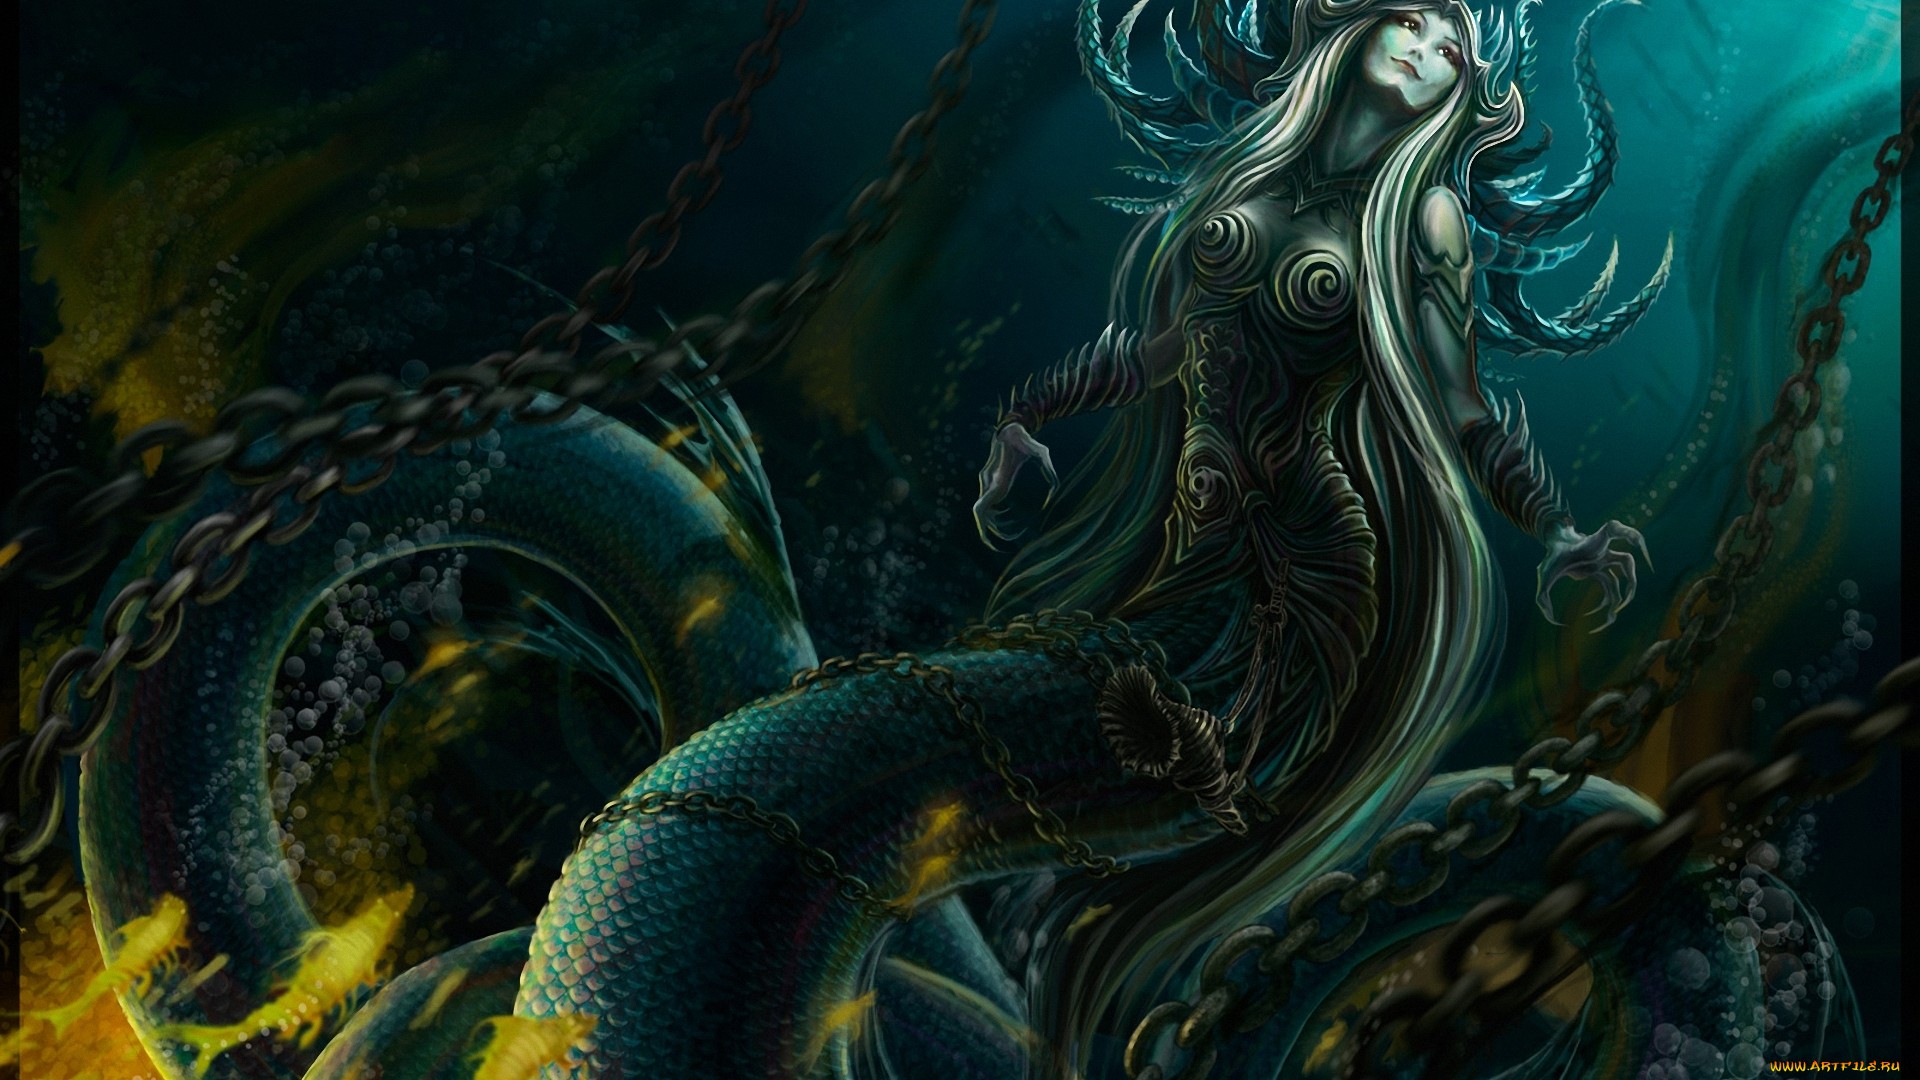 Fantasy Sea Monster Creature Creepy Dark Underwater 1080P wallpaper  hdwallpaper deskt  Sea monsters Monster hunter world wallpaper  Underwater wallpaper